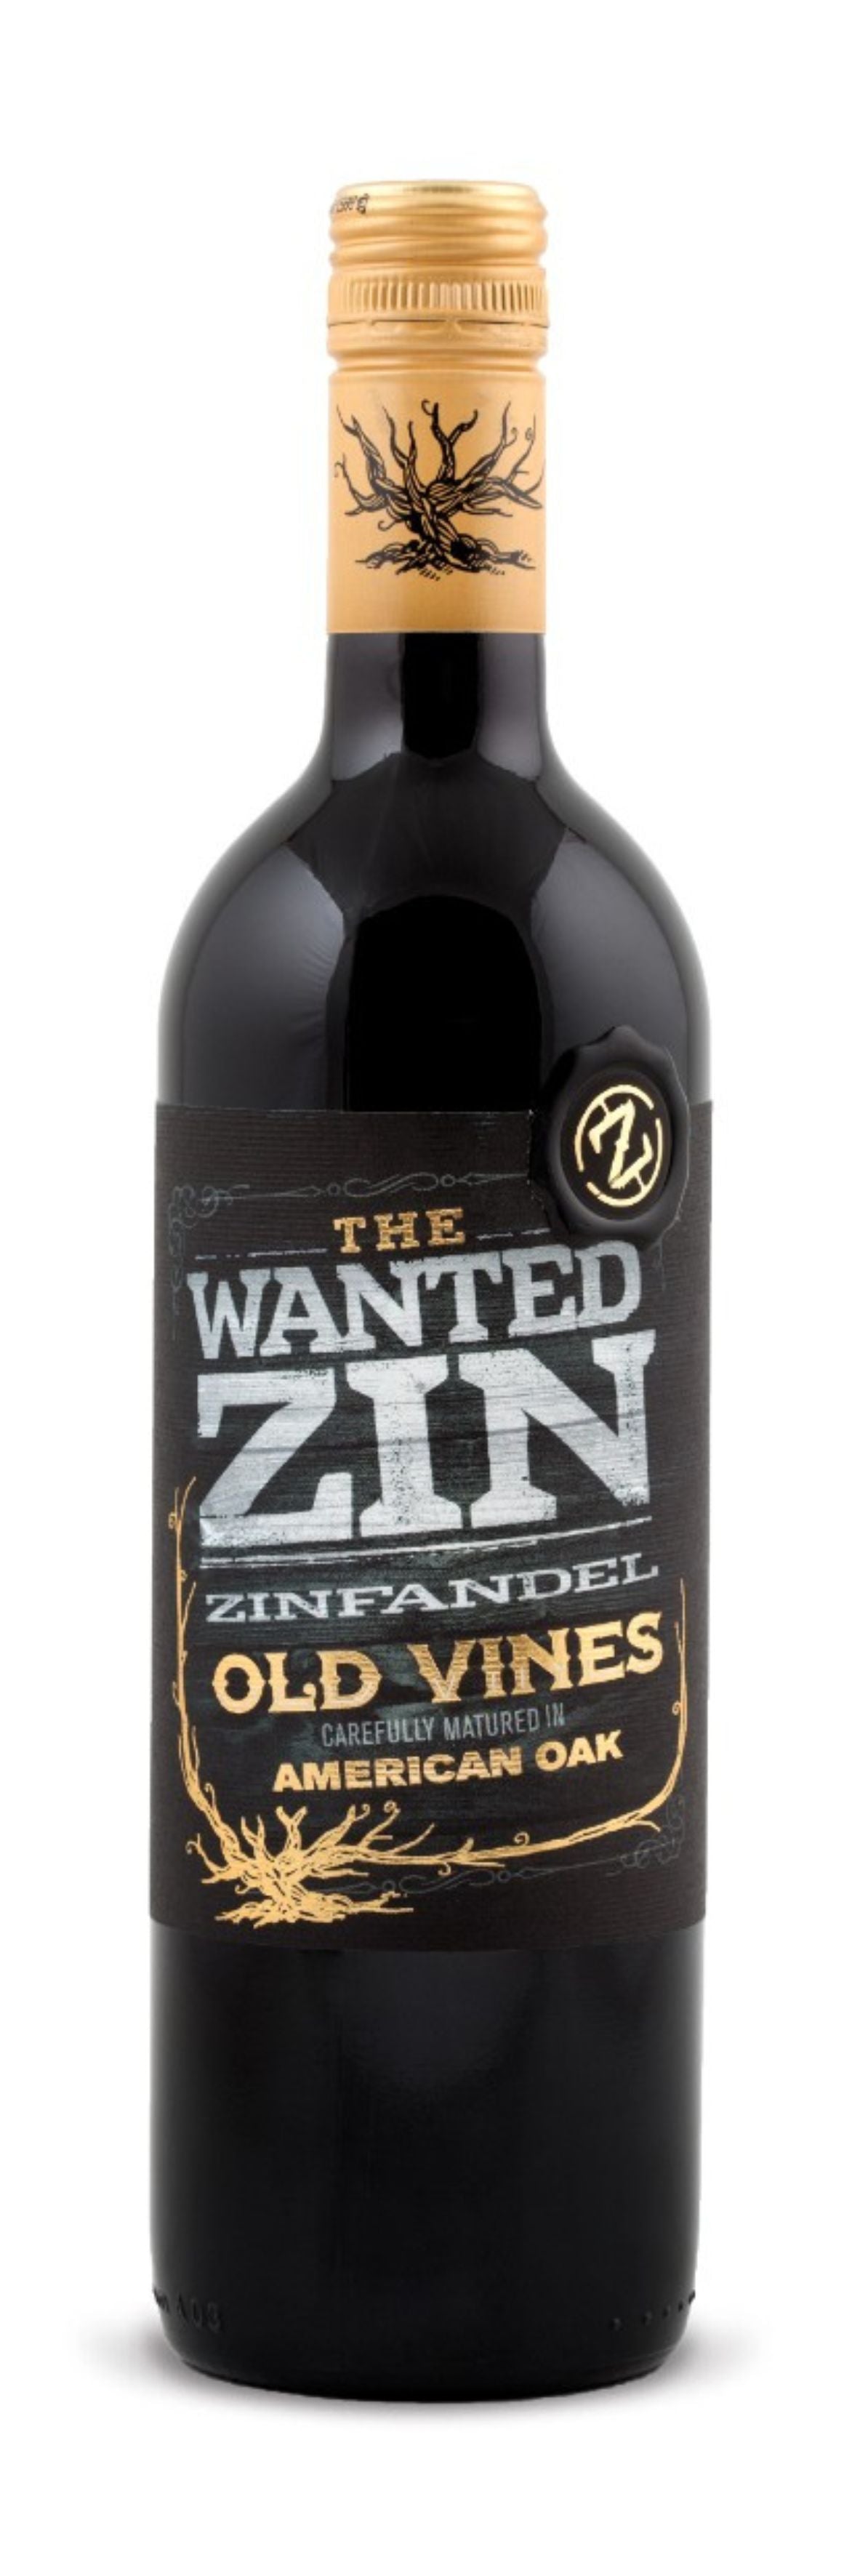 The Wanted Zin Old Vines Zinfandel IGT